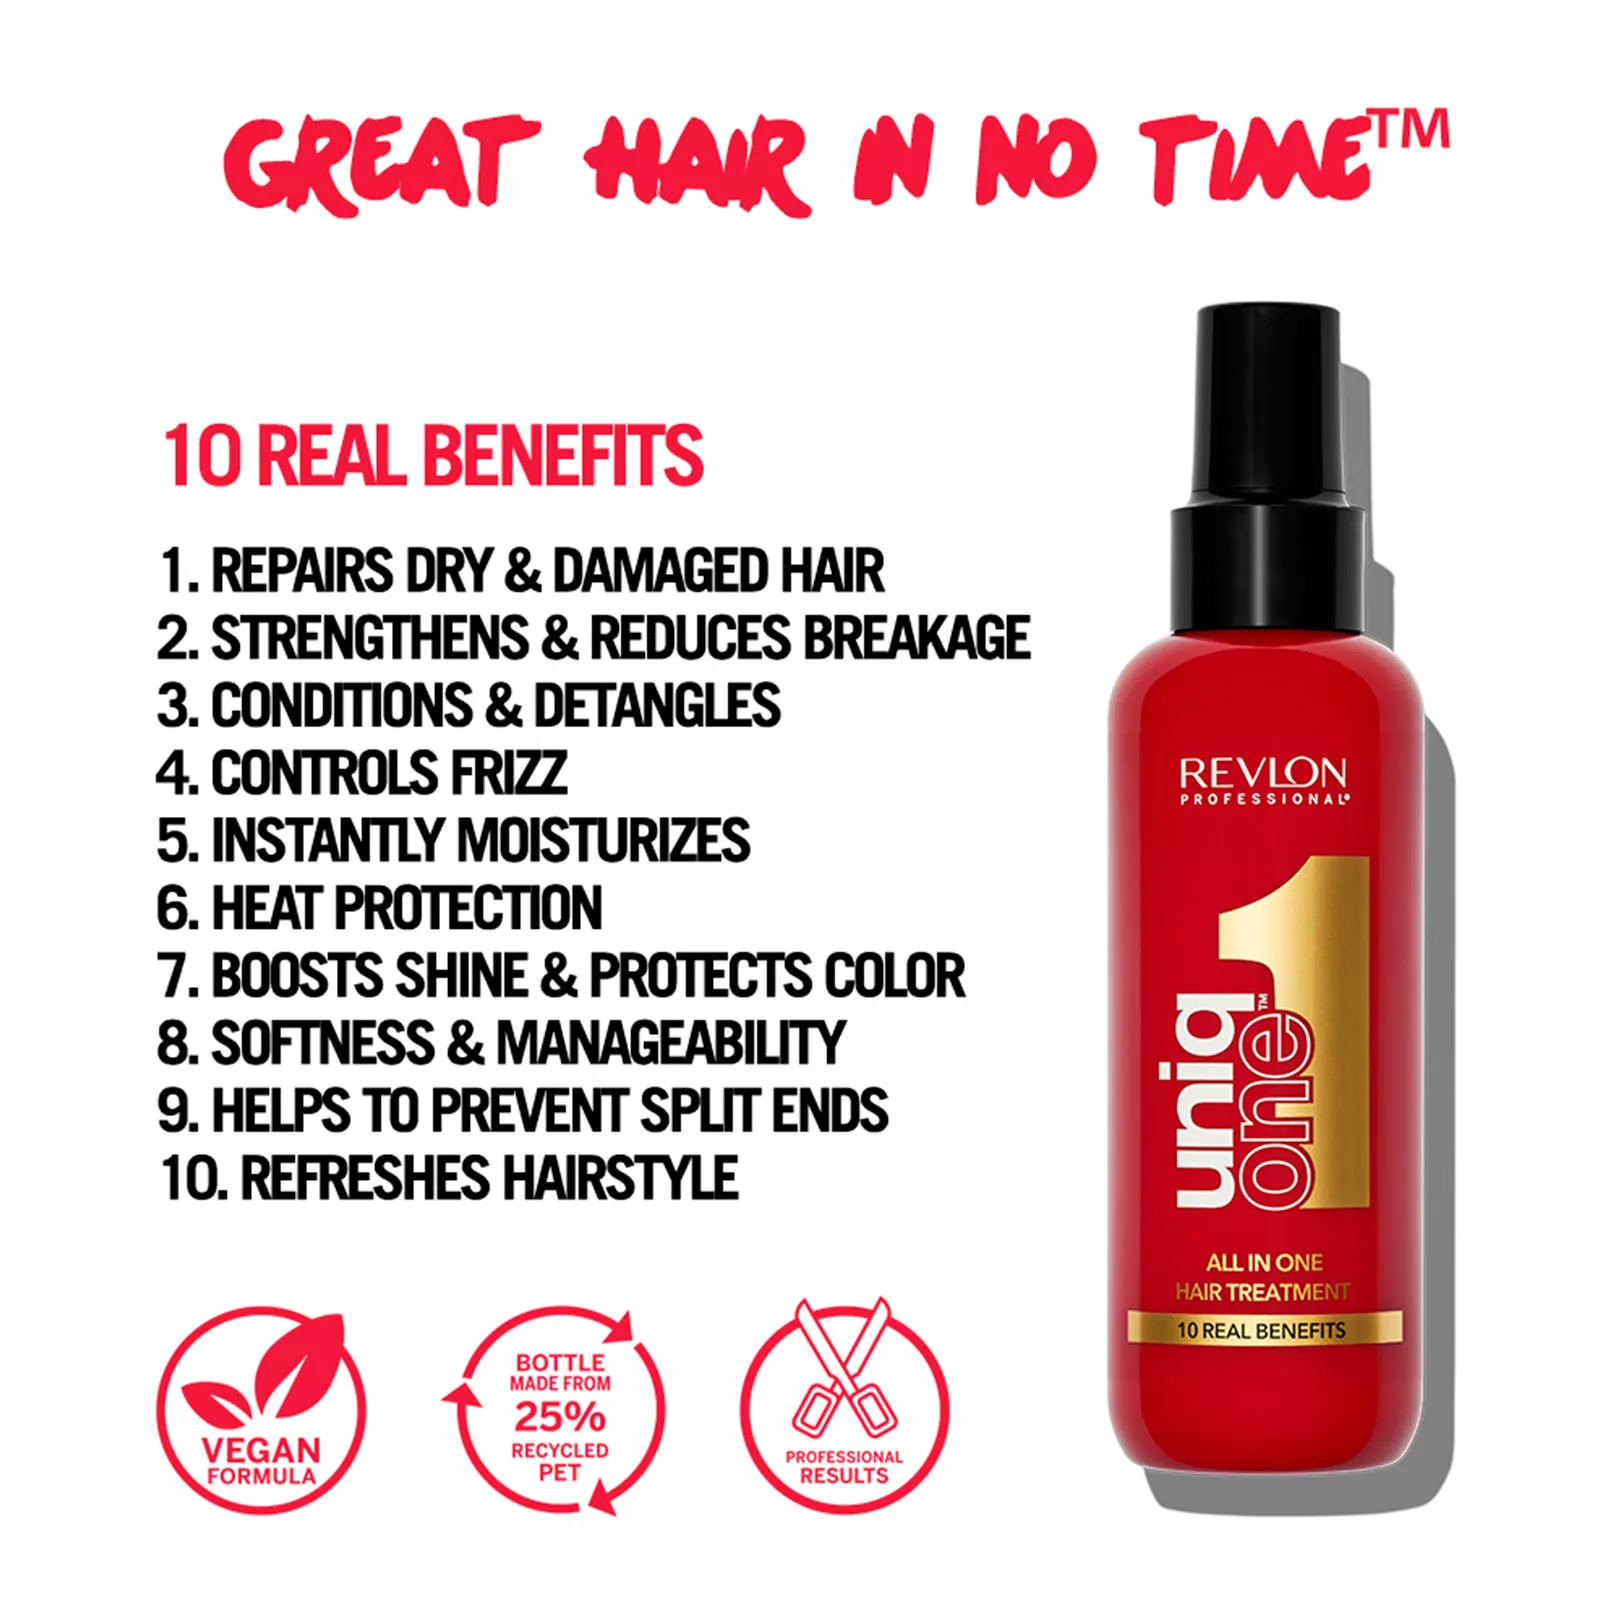 UniqOne™ Hair Treatment - Revlon Professional